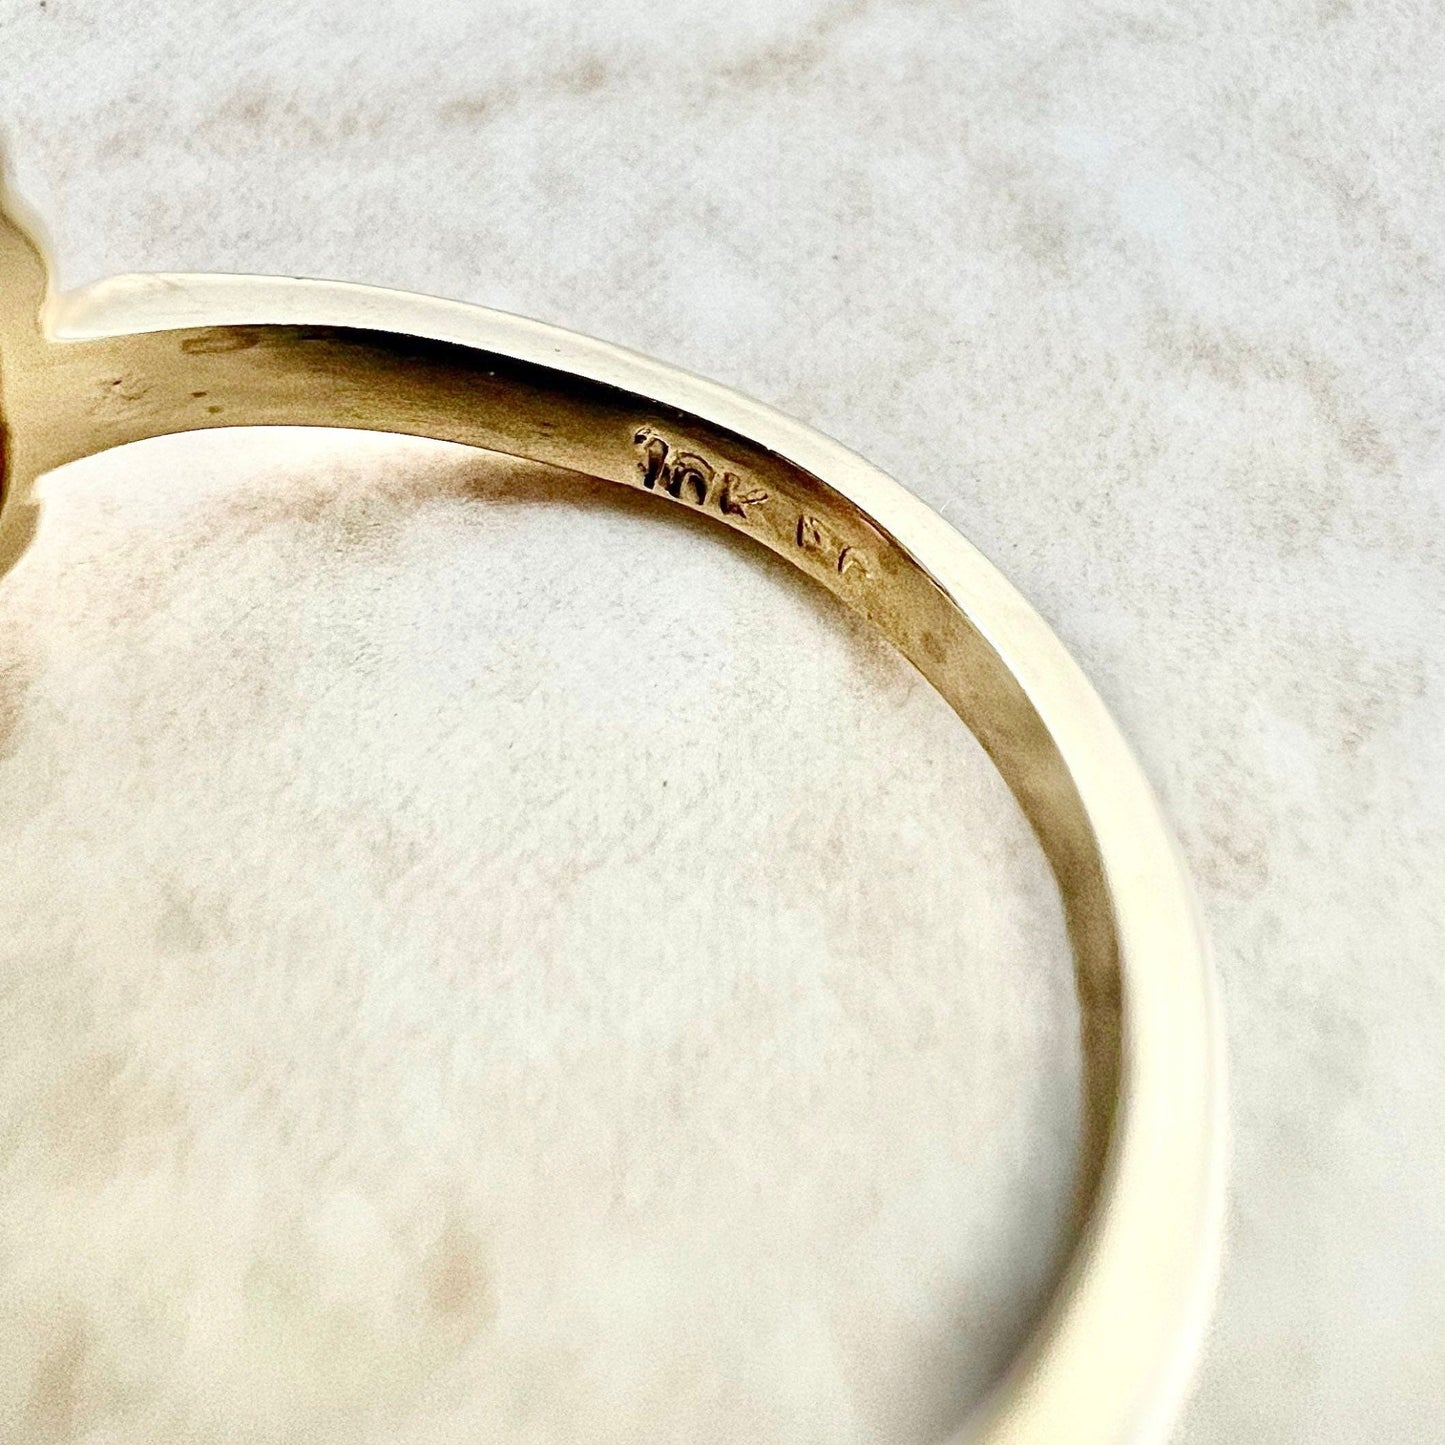 Vintage 10K Garnet Ring - 10K Yellow Gold Garnet Cocktail Ring - Gold Garnet Ring - January Birthstone - Birthday Gifts - Best Gifts For Her